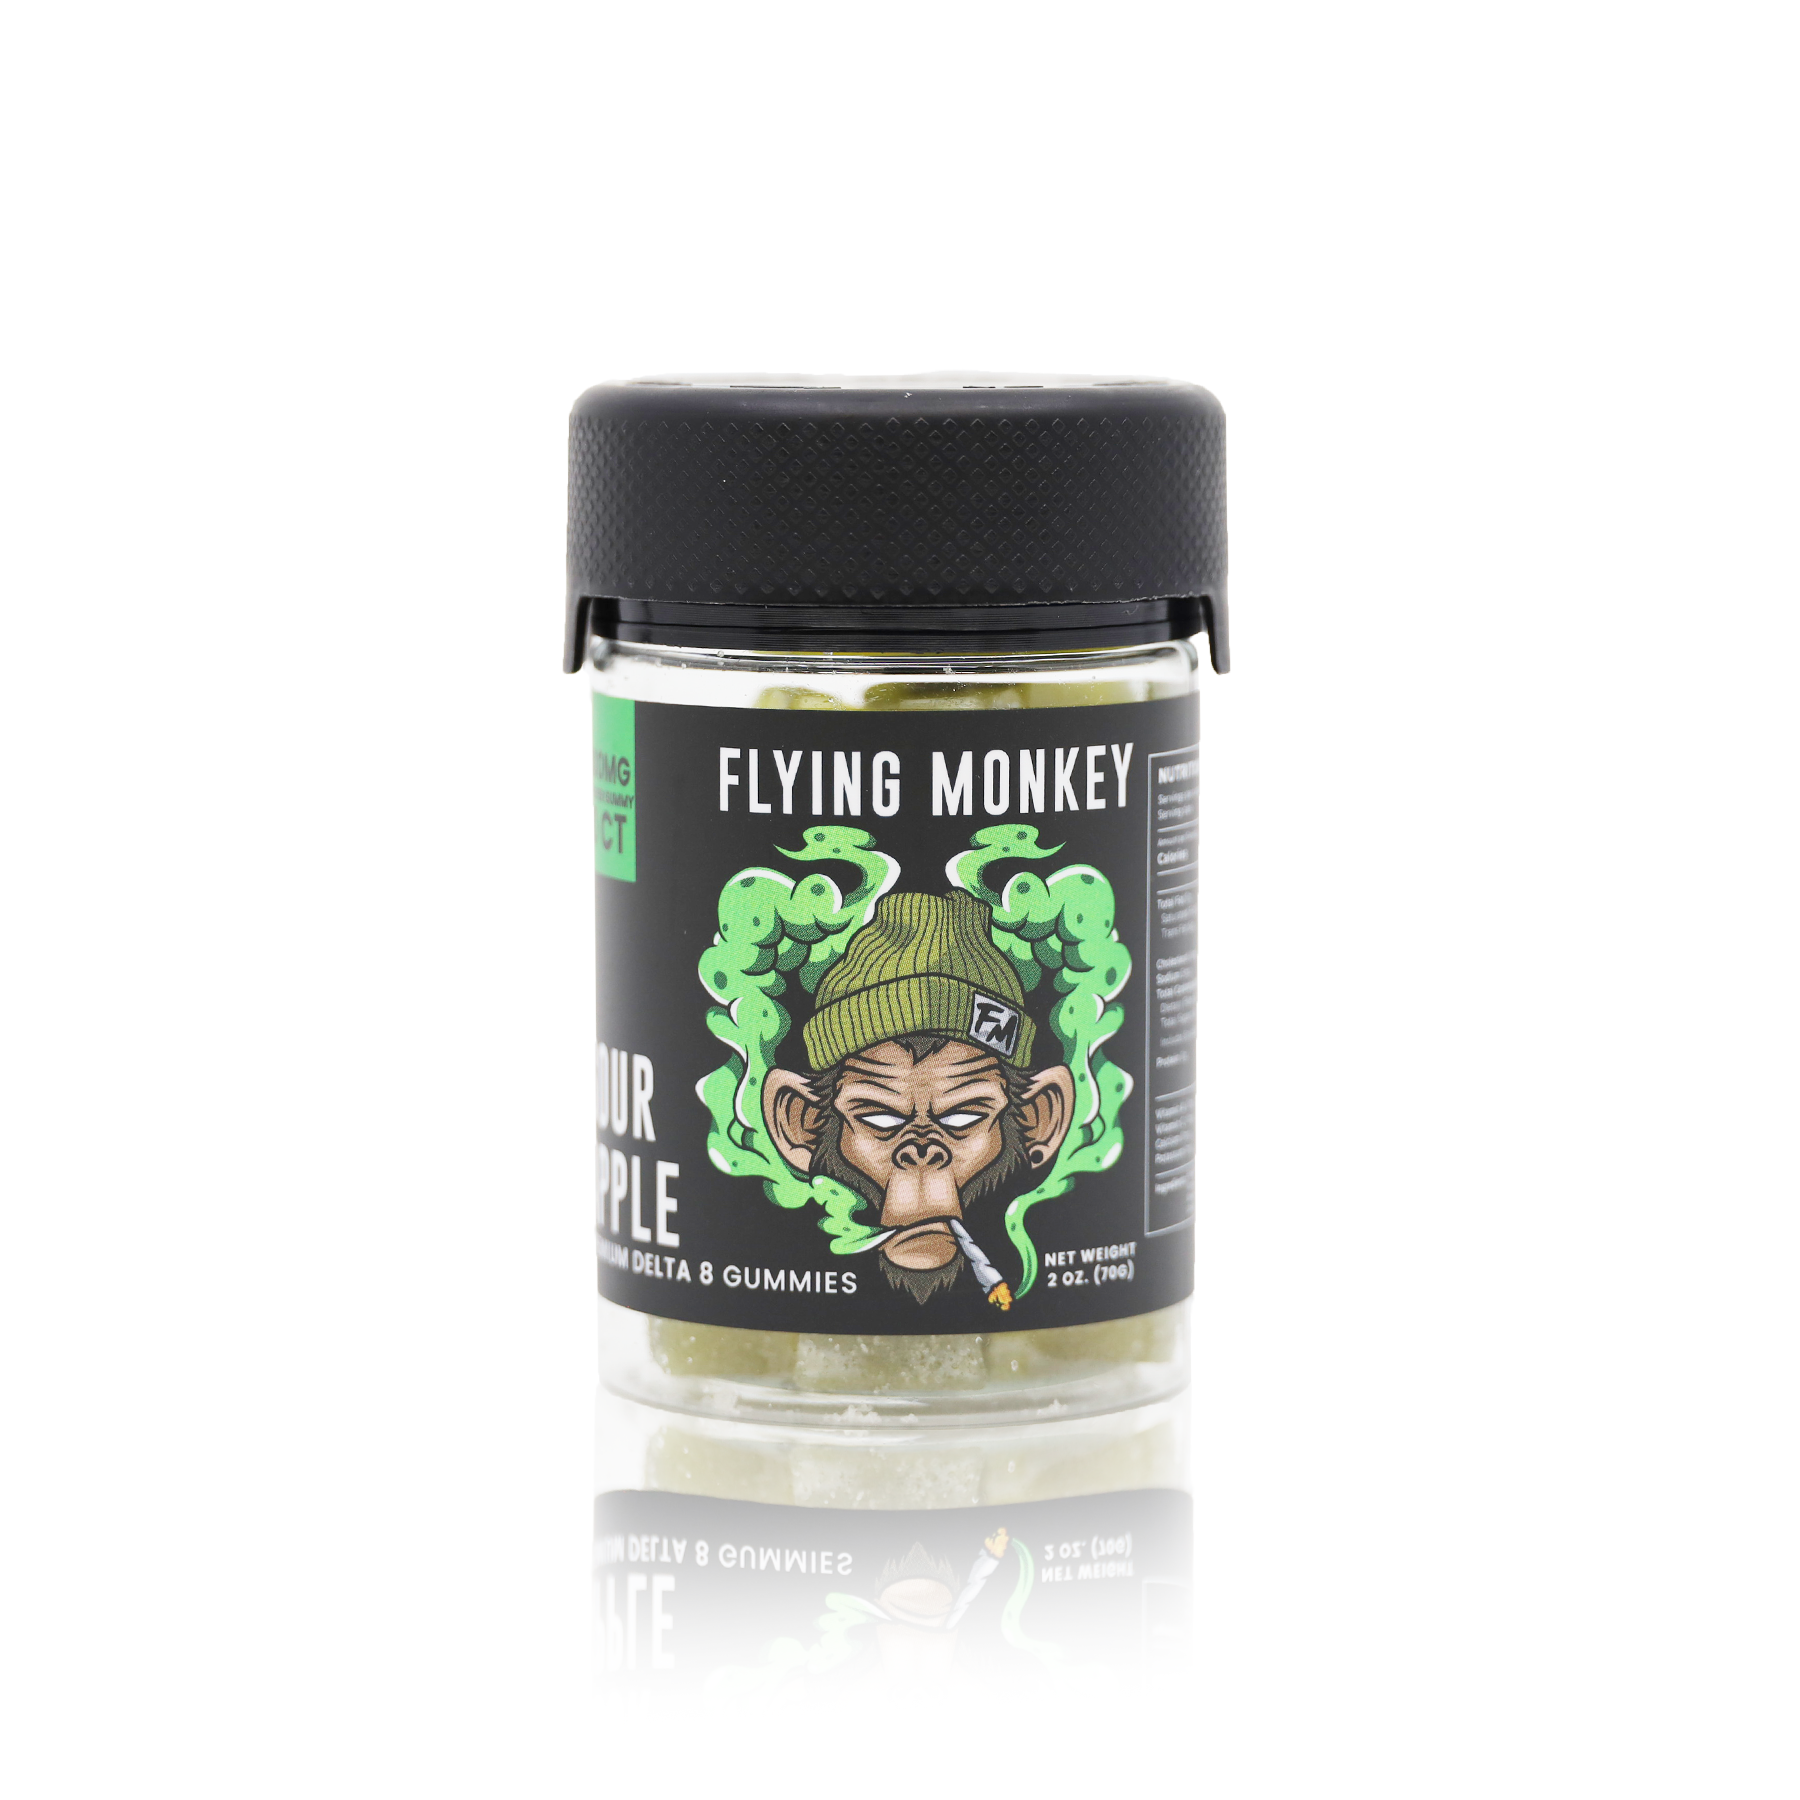 Flying Monkey Delta 8 THC 50mg gummy jar in Sour Apple flavor